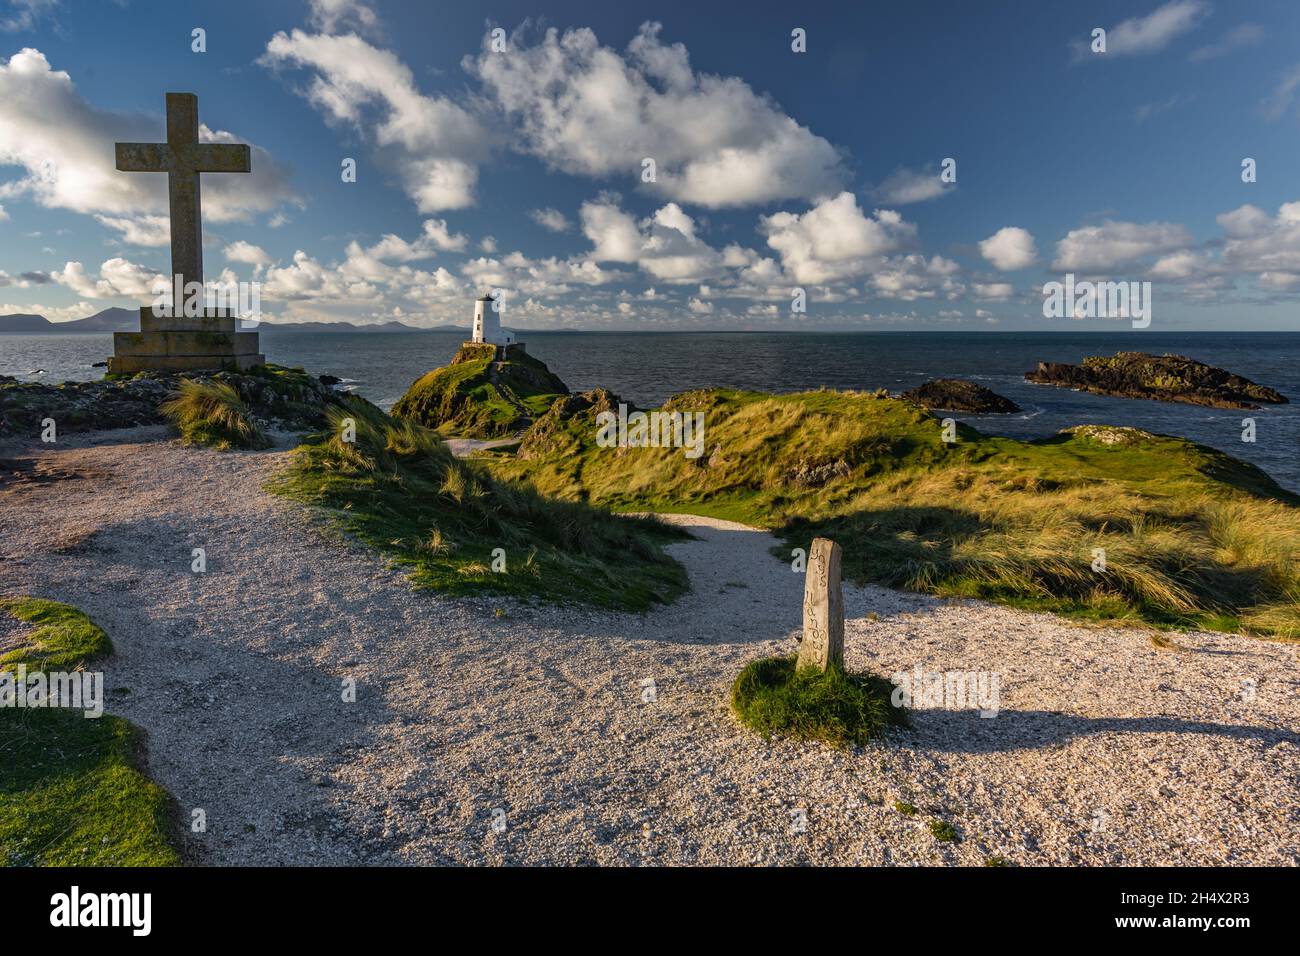 Faro de la isla de Llanddwyn, Twr Mawr, Ynys Llanddwyn en Ynys Mon (Anglesey), Gales del Norte. Foto de stock